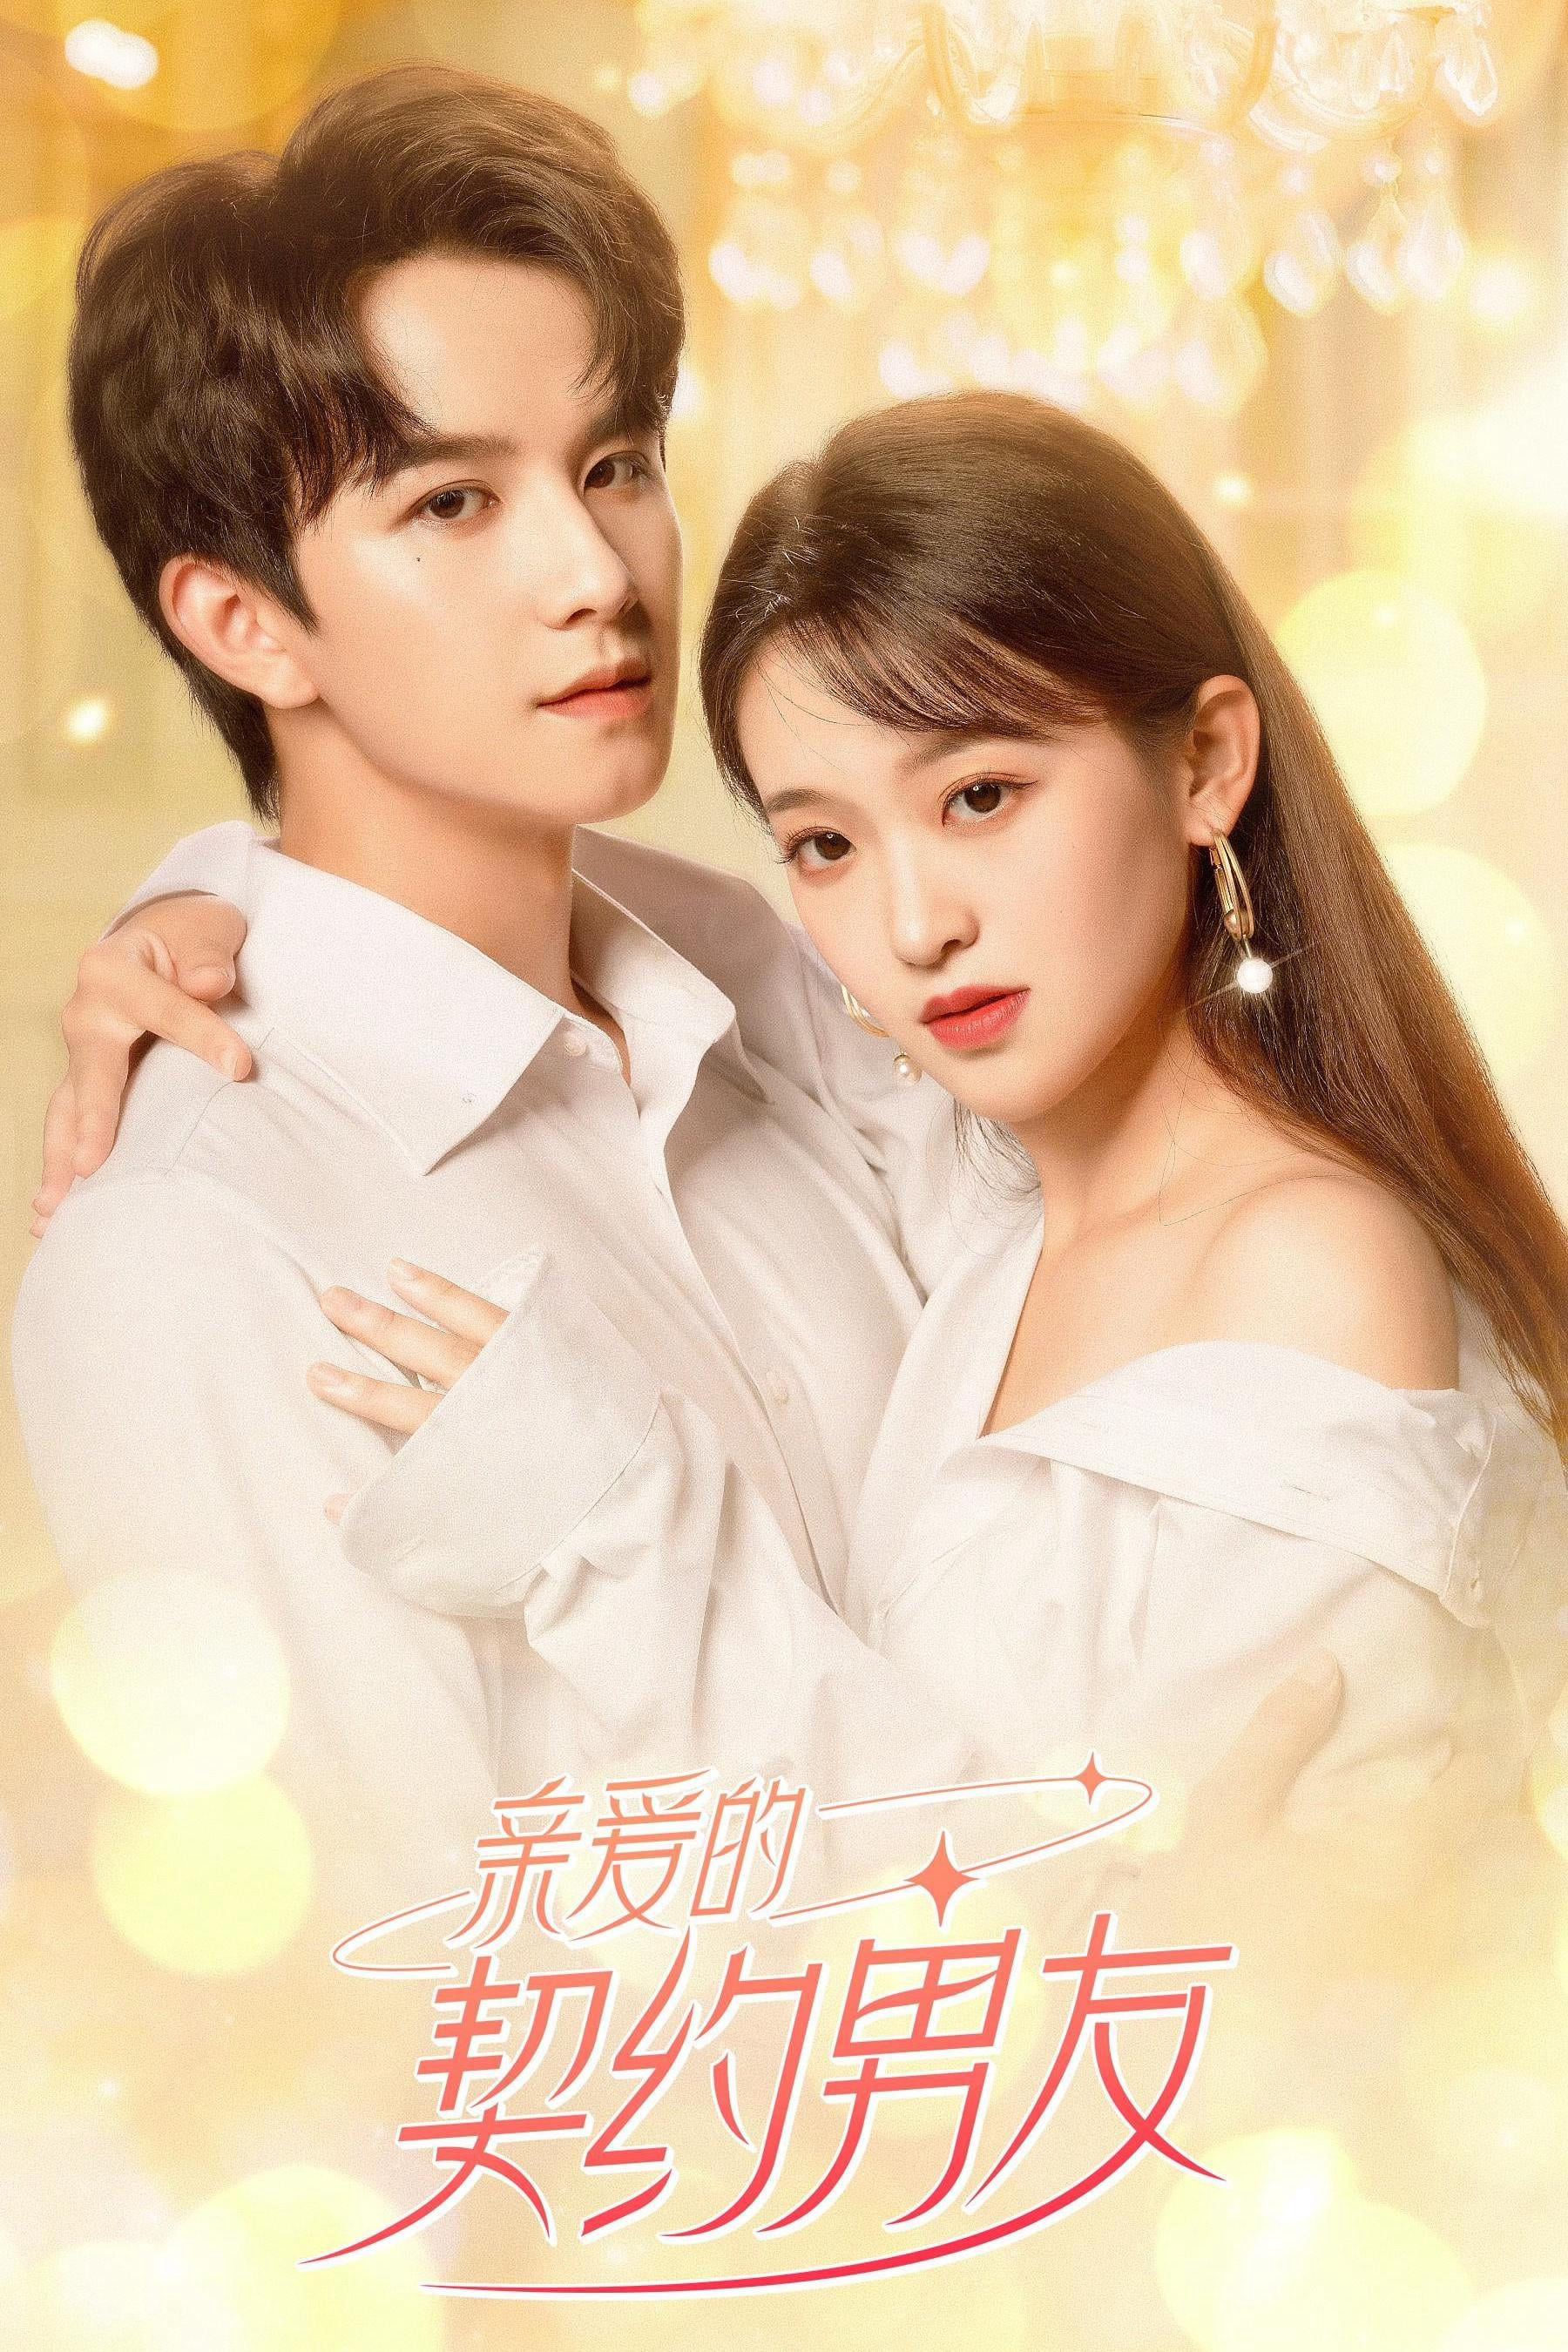 Poster Phim Bạn Trai Hợp Đồng (Dear Contract Boyfriend)